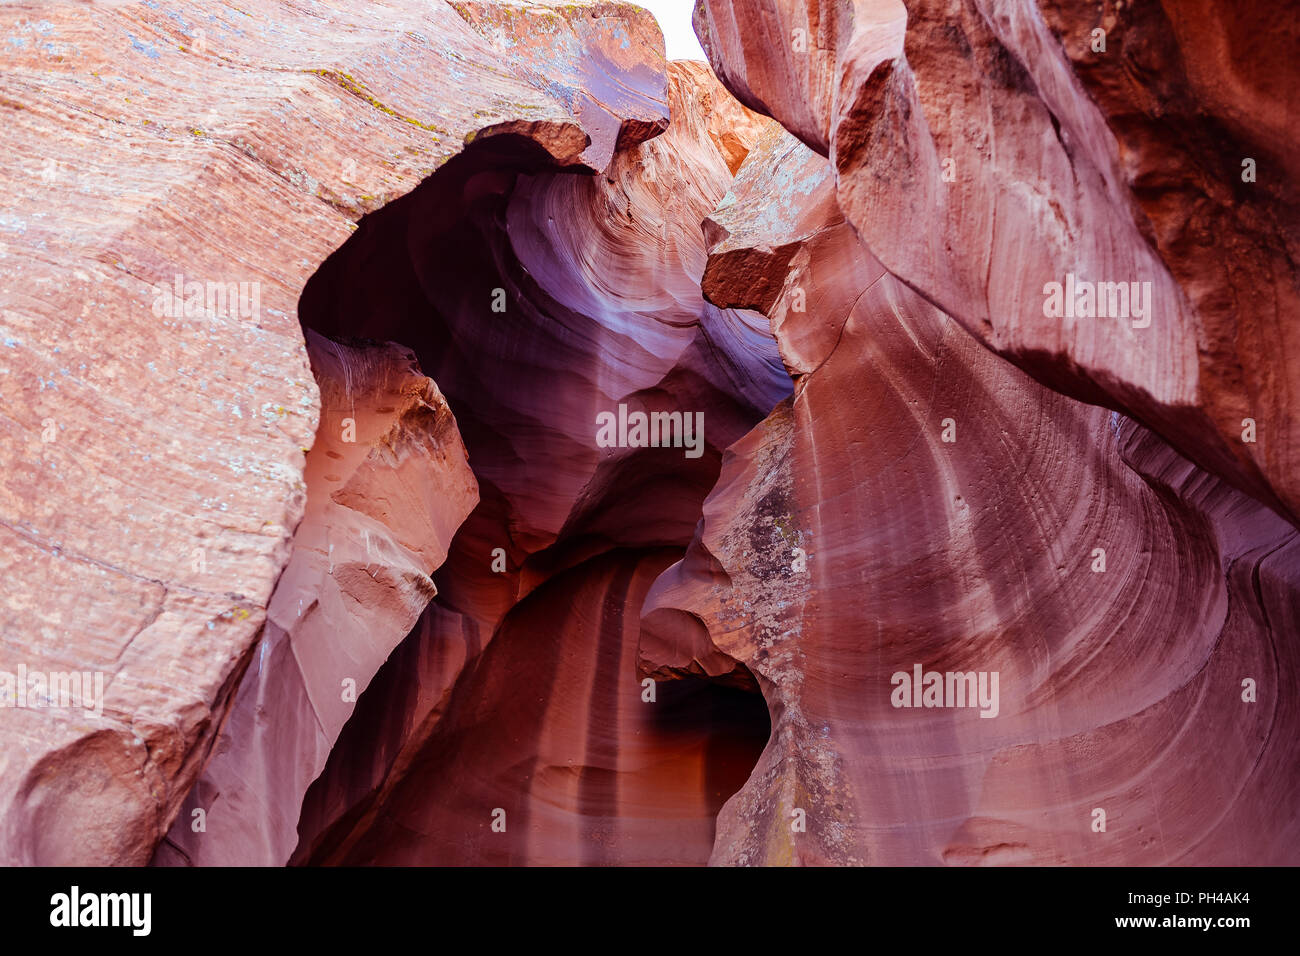 Underground Sandstone Rock Formation in Antelope Canyon - near Page, Arizona Stock Photo